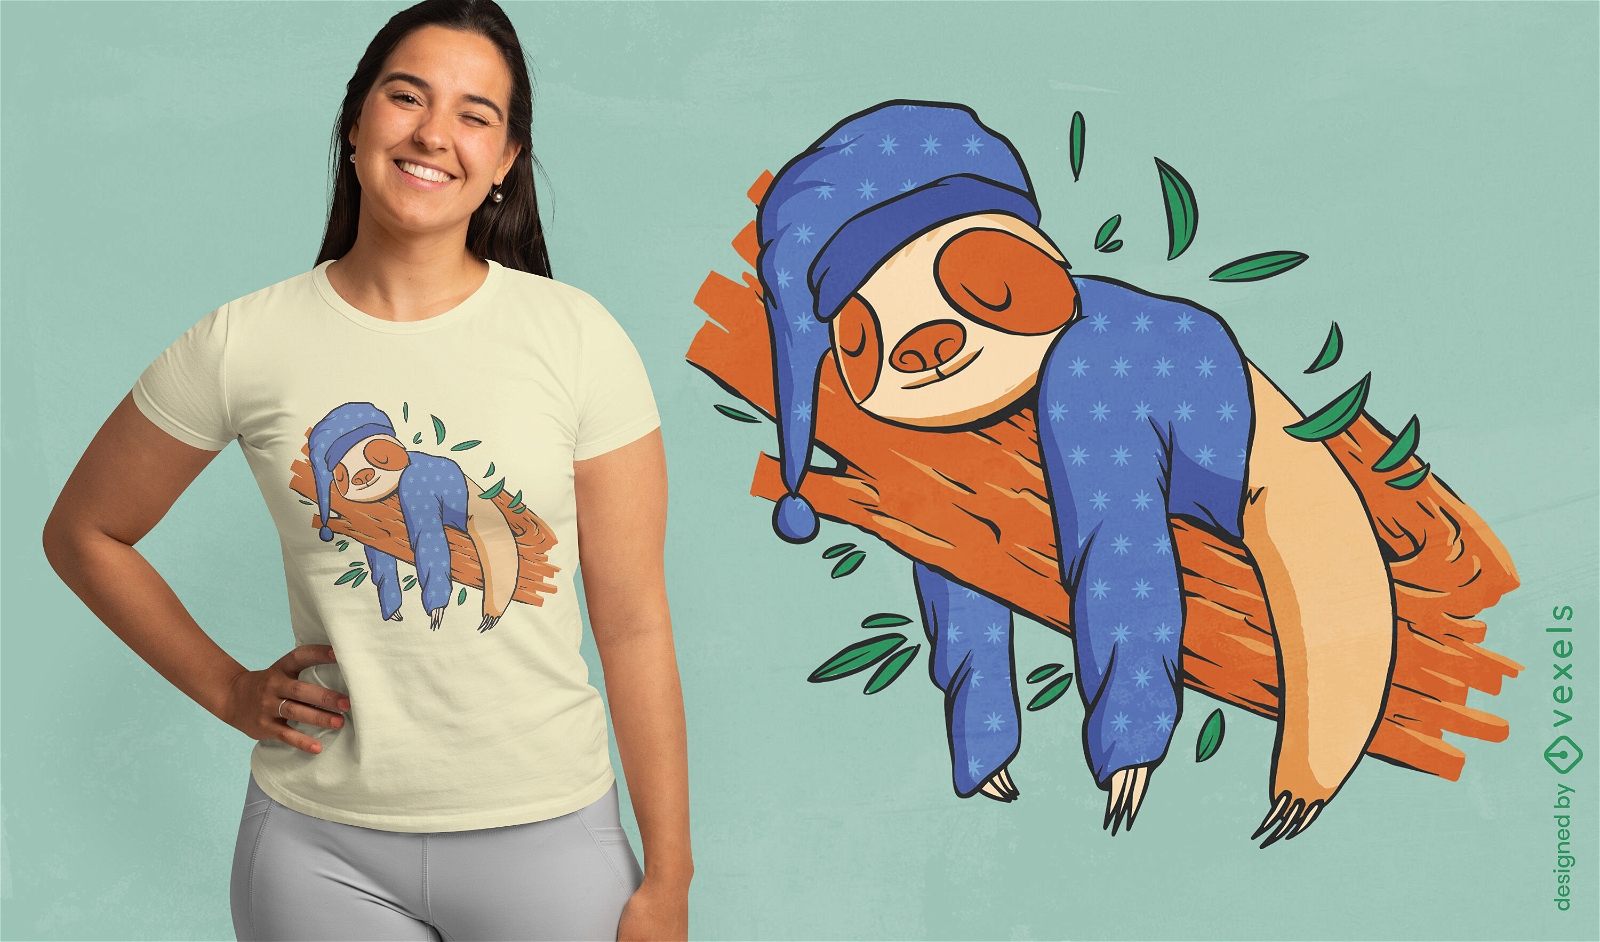 Sleepy sloth t-shirt design